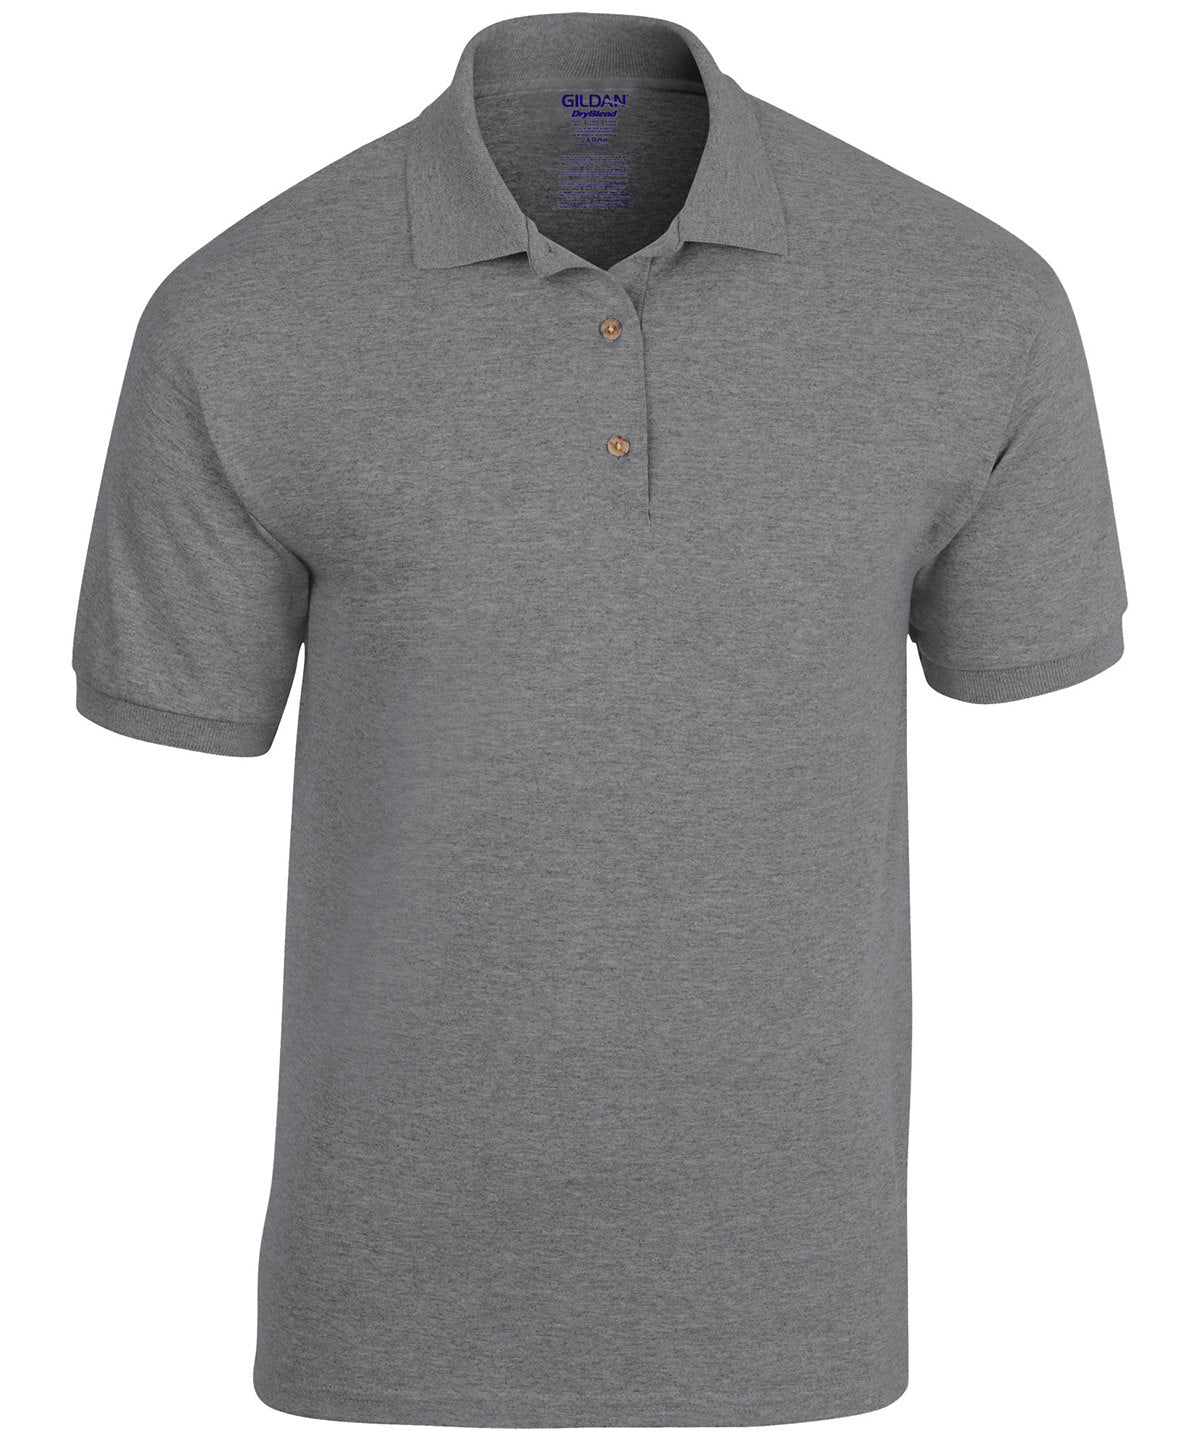 Personalised Polo Shirts - Black Gildan DryBlend® Jersey knit polo